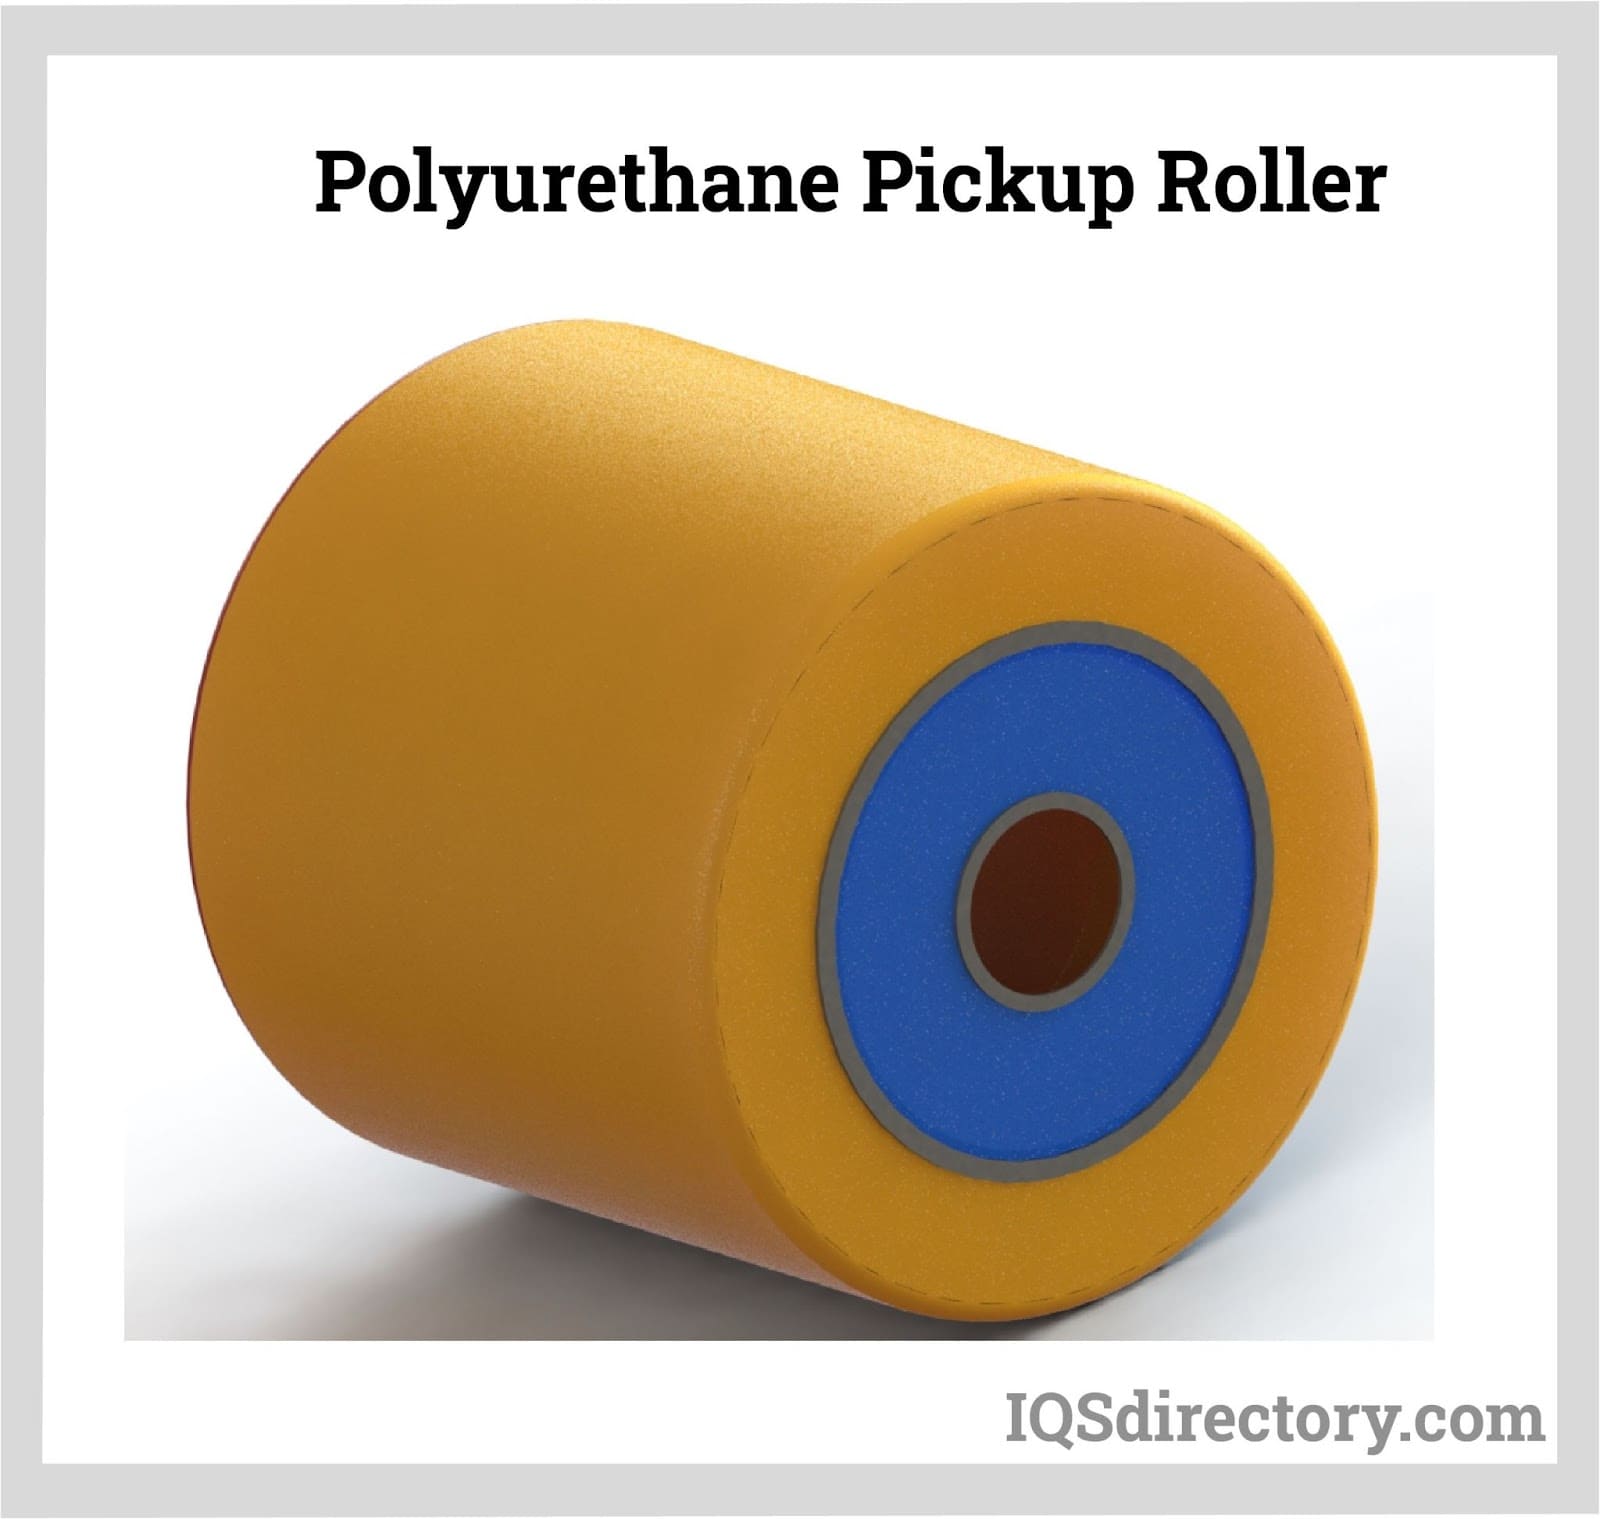 Polyurethane Pickup Roller